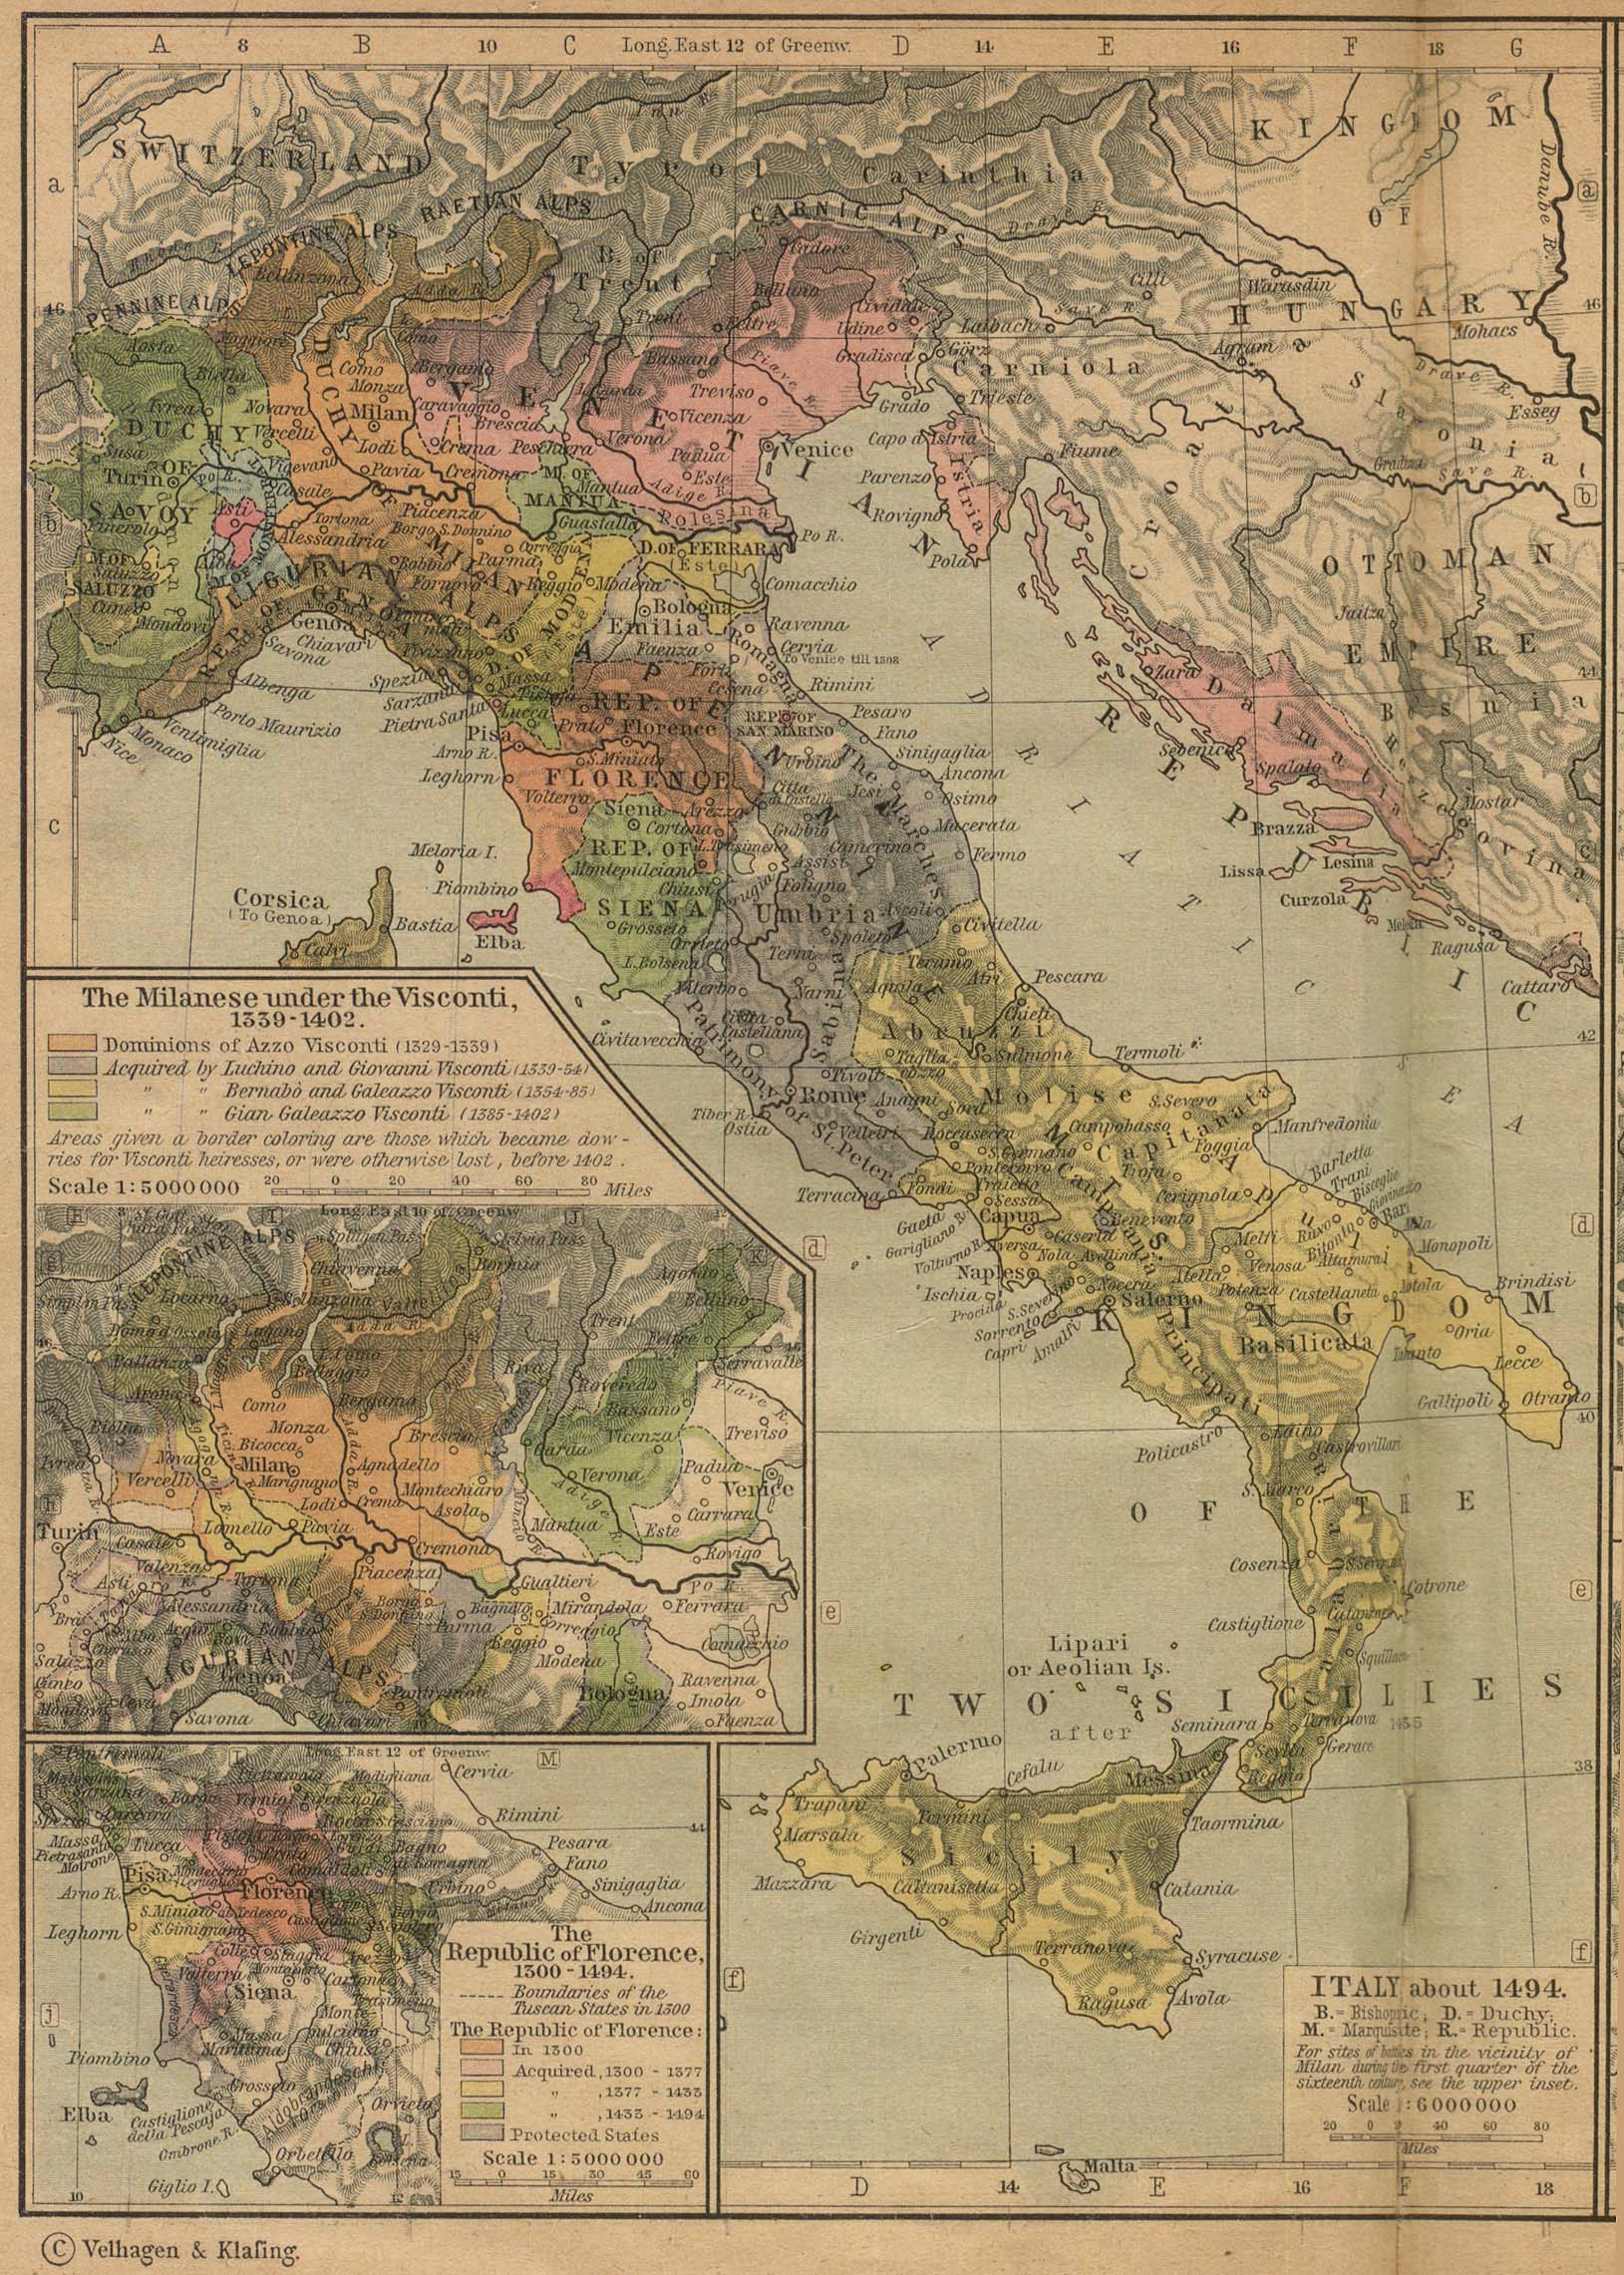 WHKMLA : Historical Atlas, Italy Page